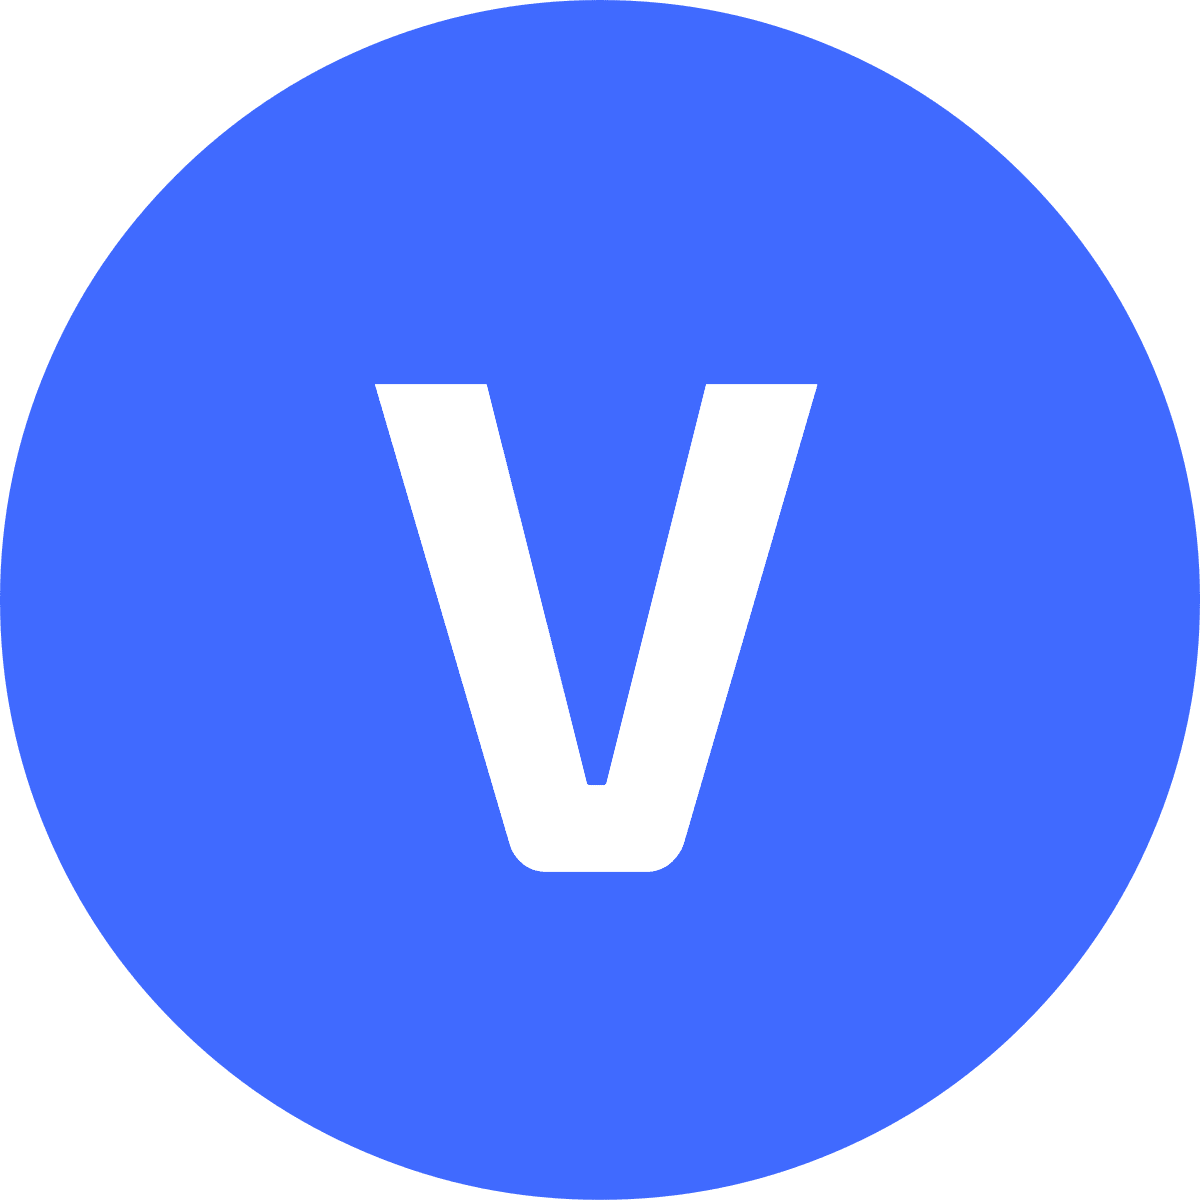 The Blue Circle Contains The V Logo Representing Magix Vegas Pro.